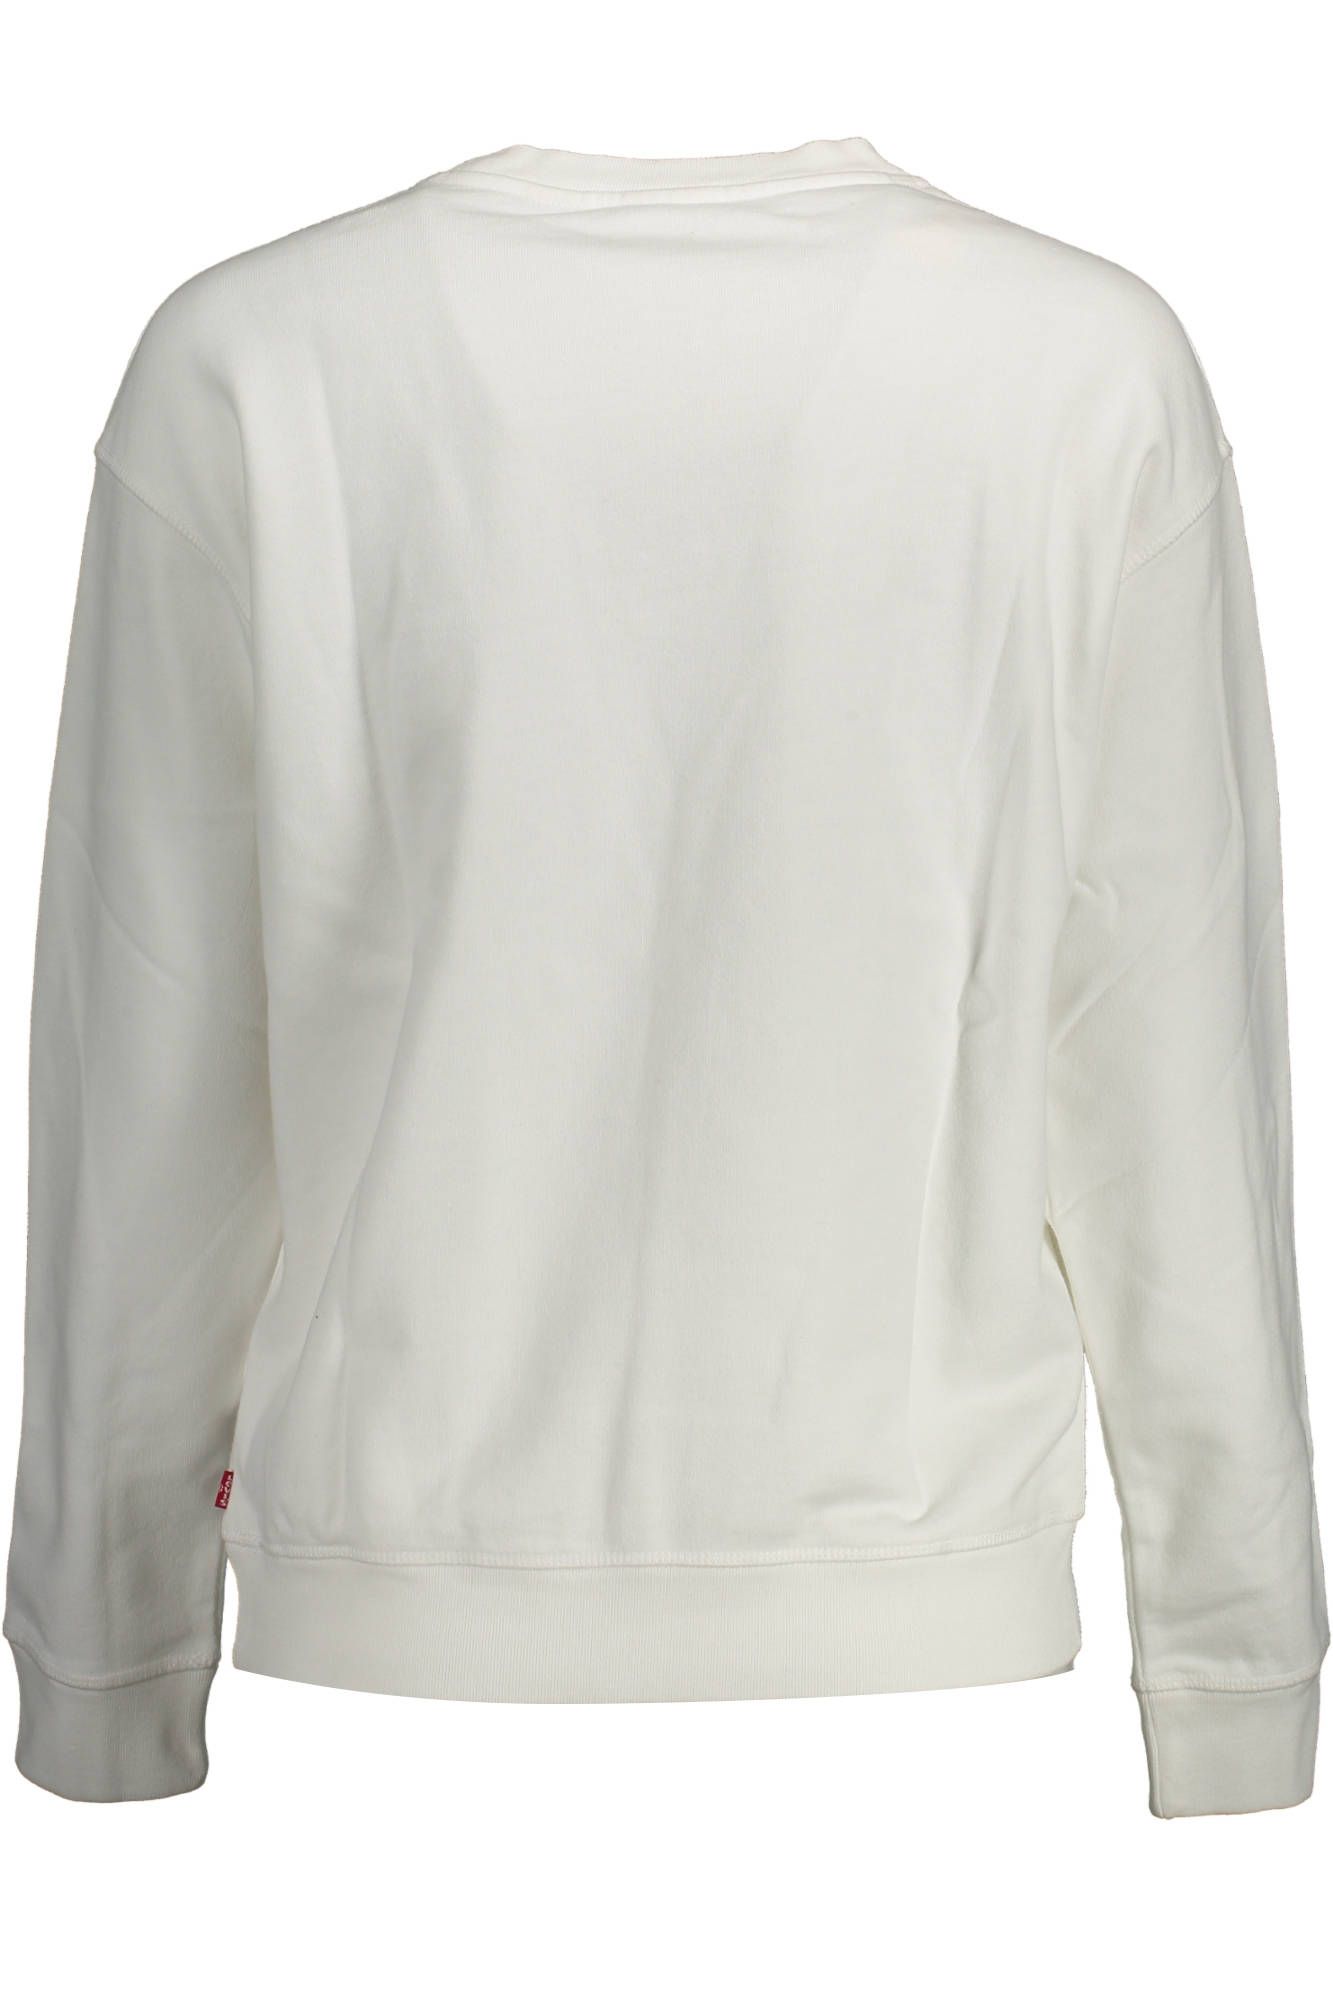 Levi's Women's White Cotton Round Neck Sweater